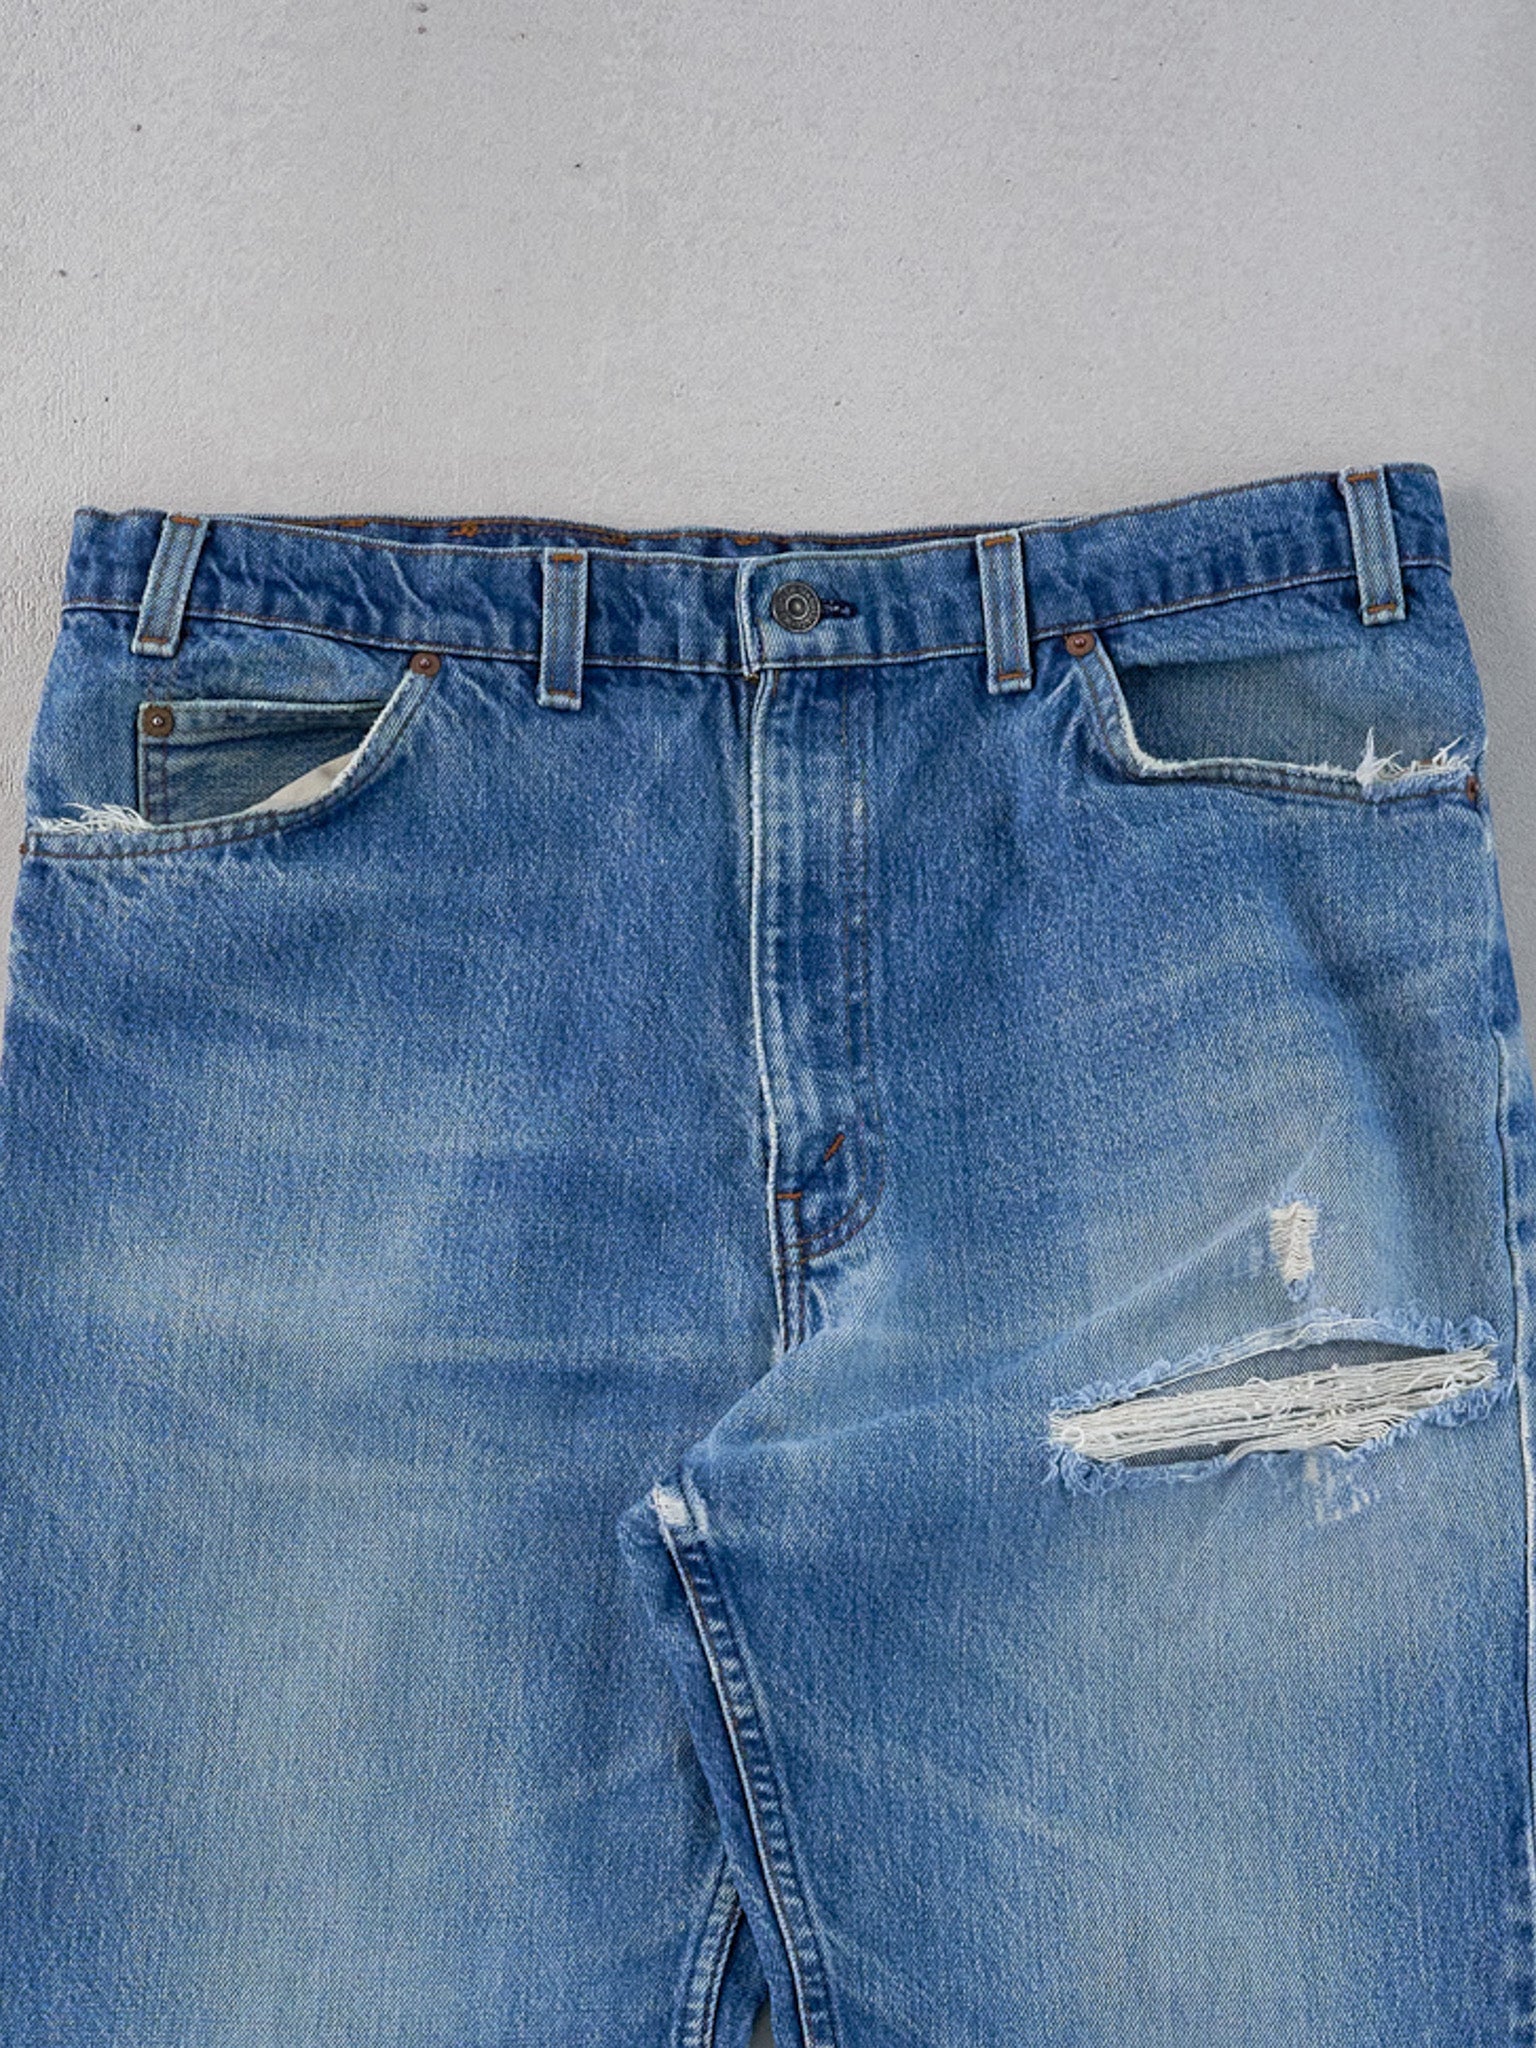 Vintage 70s Dark Blue Levi's 506 Denim Jeans (36x29)